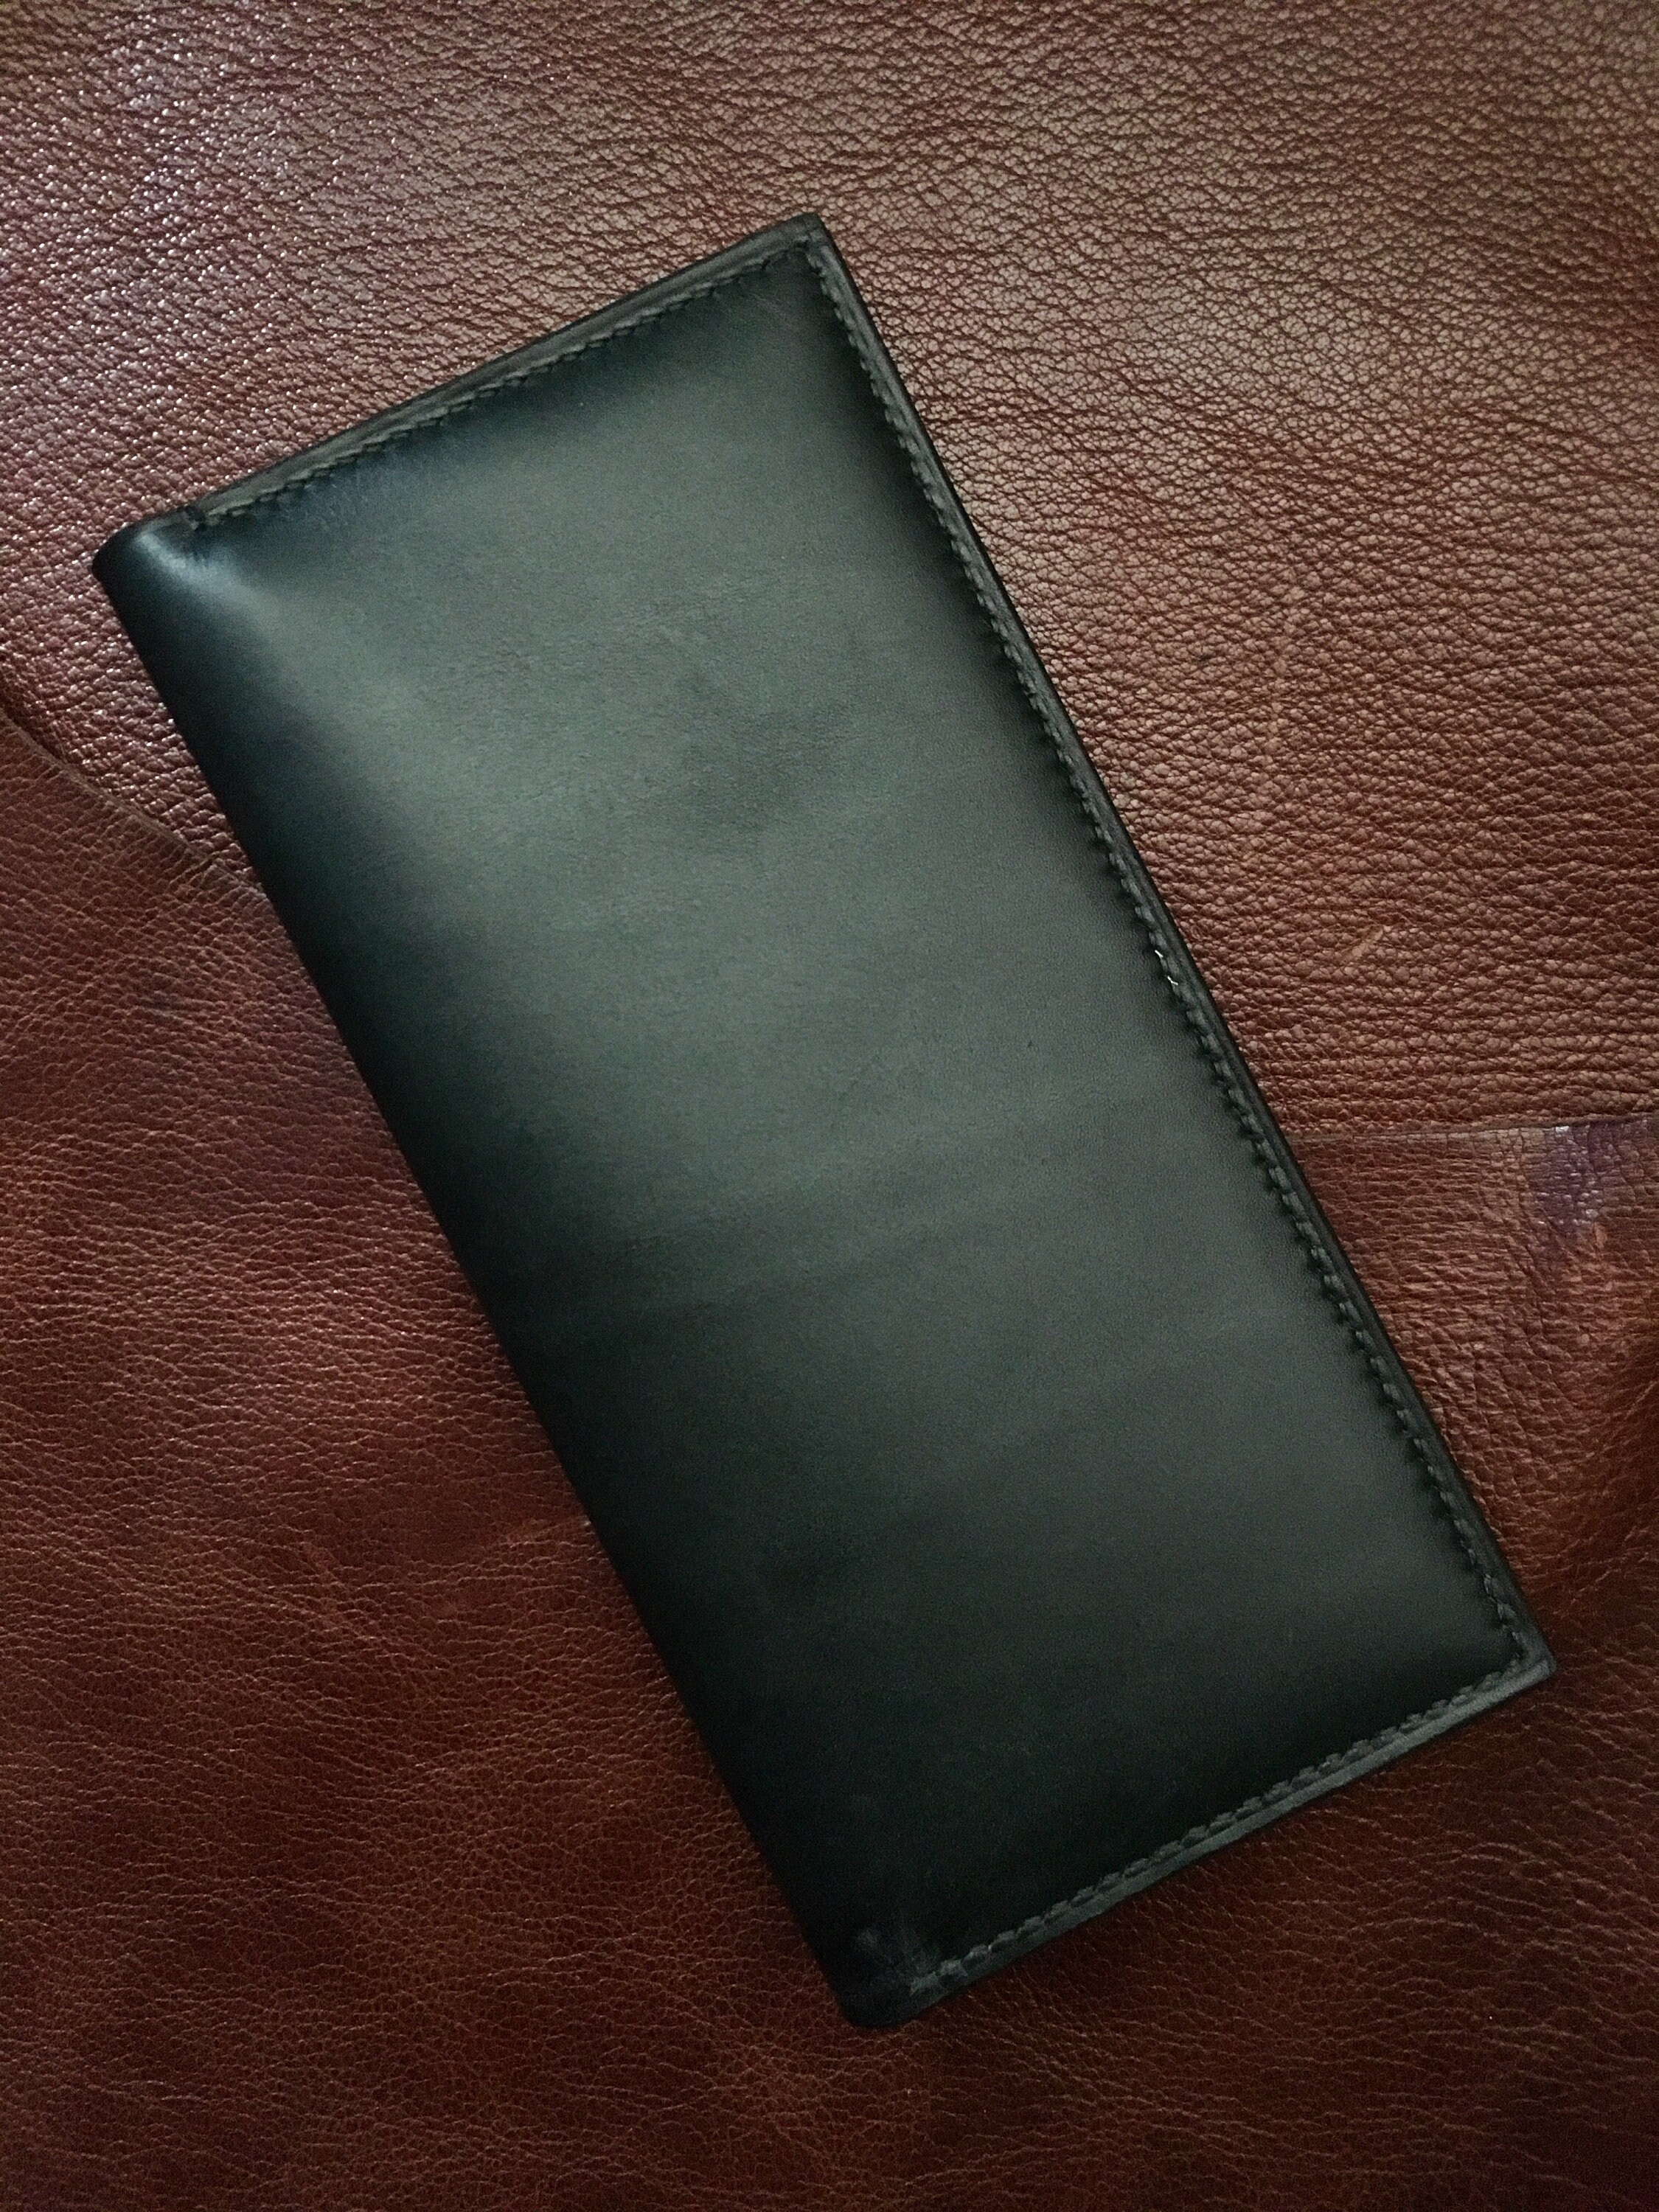 Leather wallet woman purse wallet Personalized wallet | Etsy